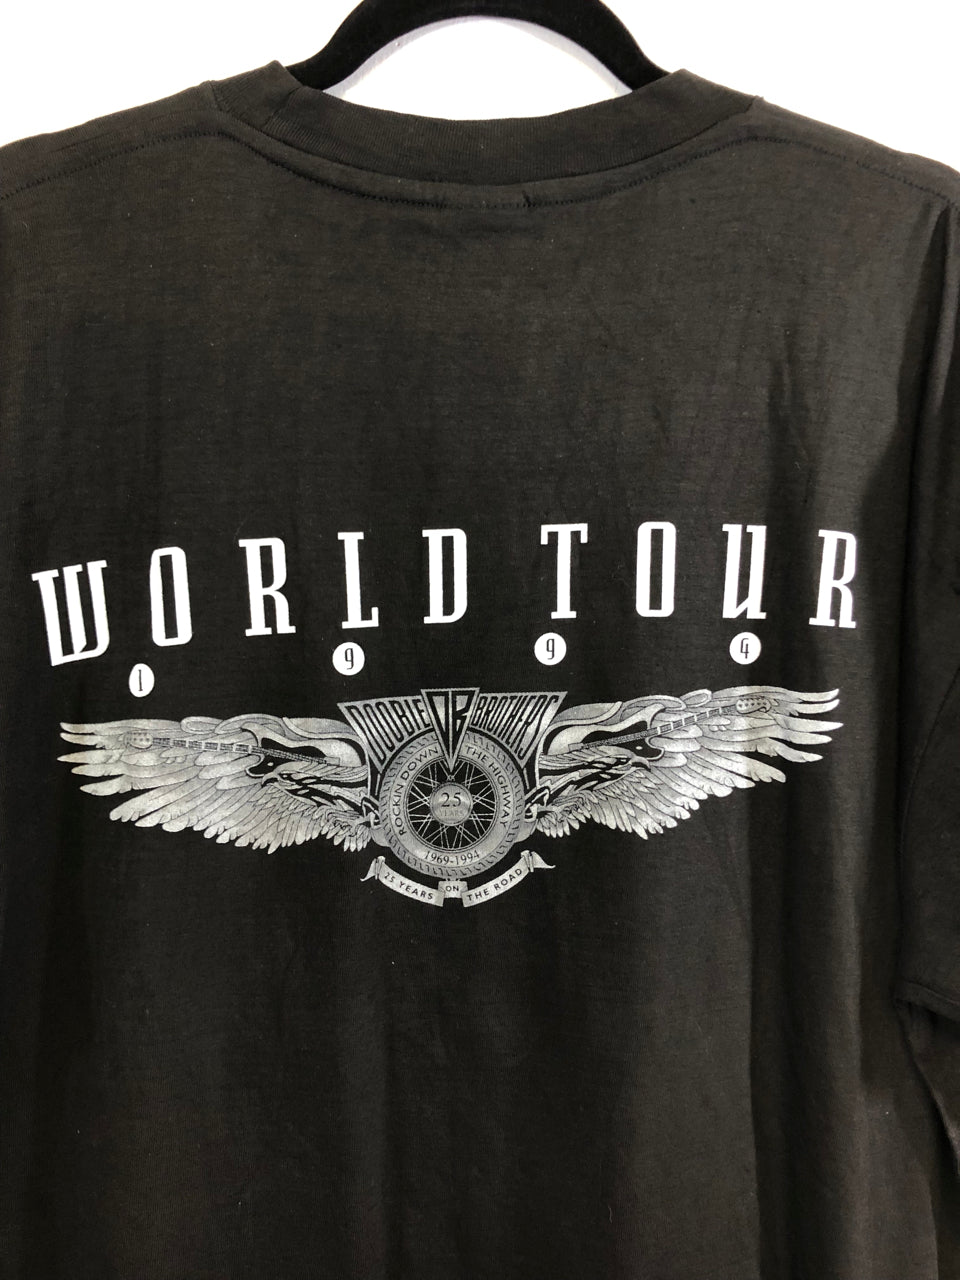 Doobie Brothers World Tour 1994 T-Shirt